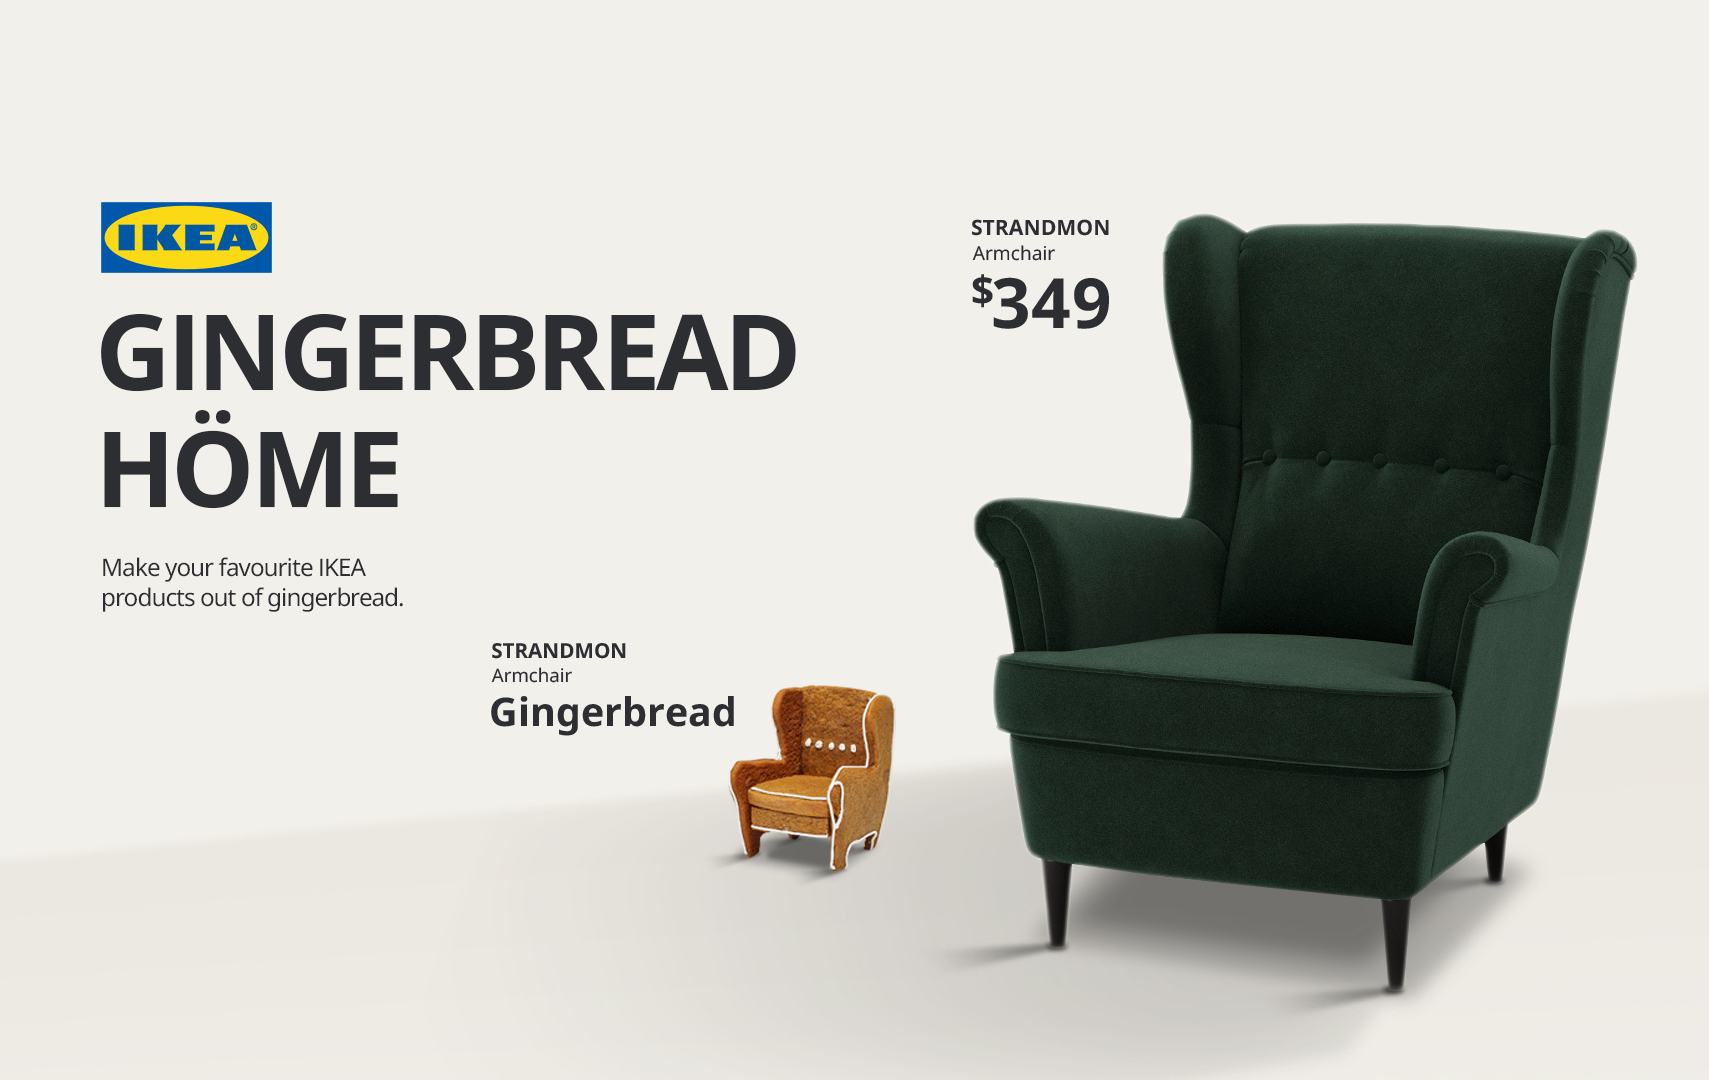 IKEA Gingerbread Höme